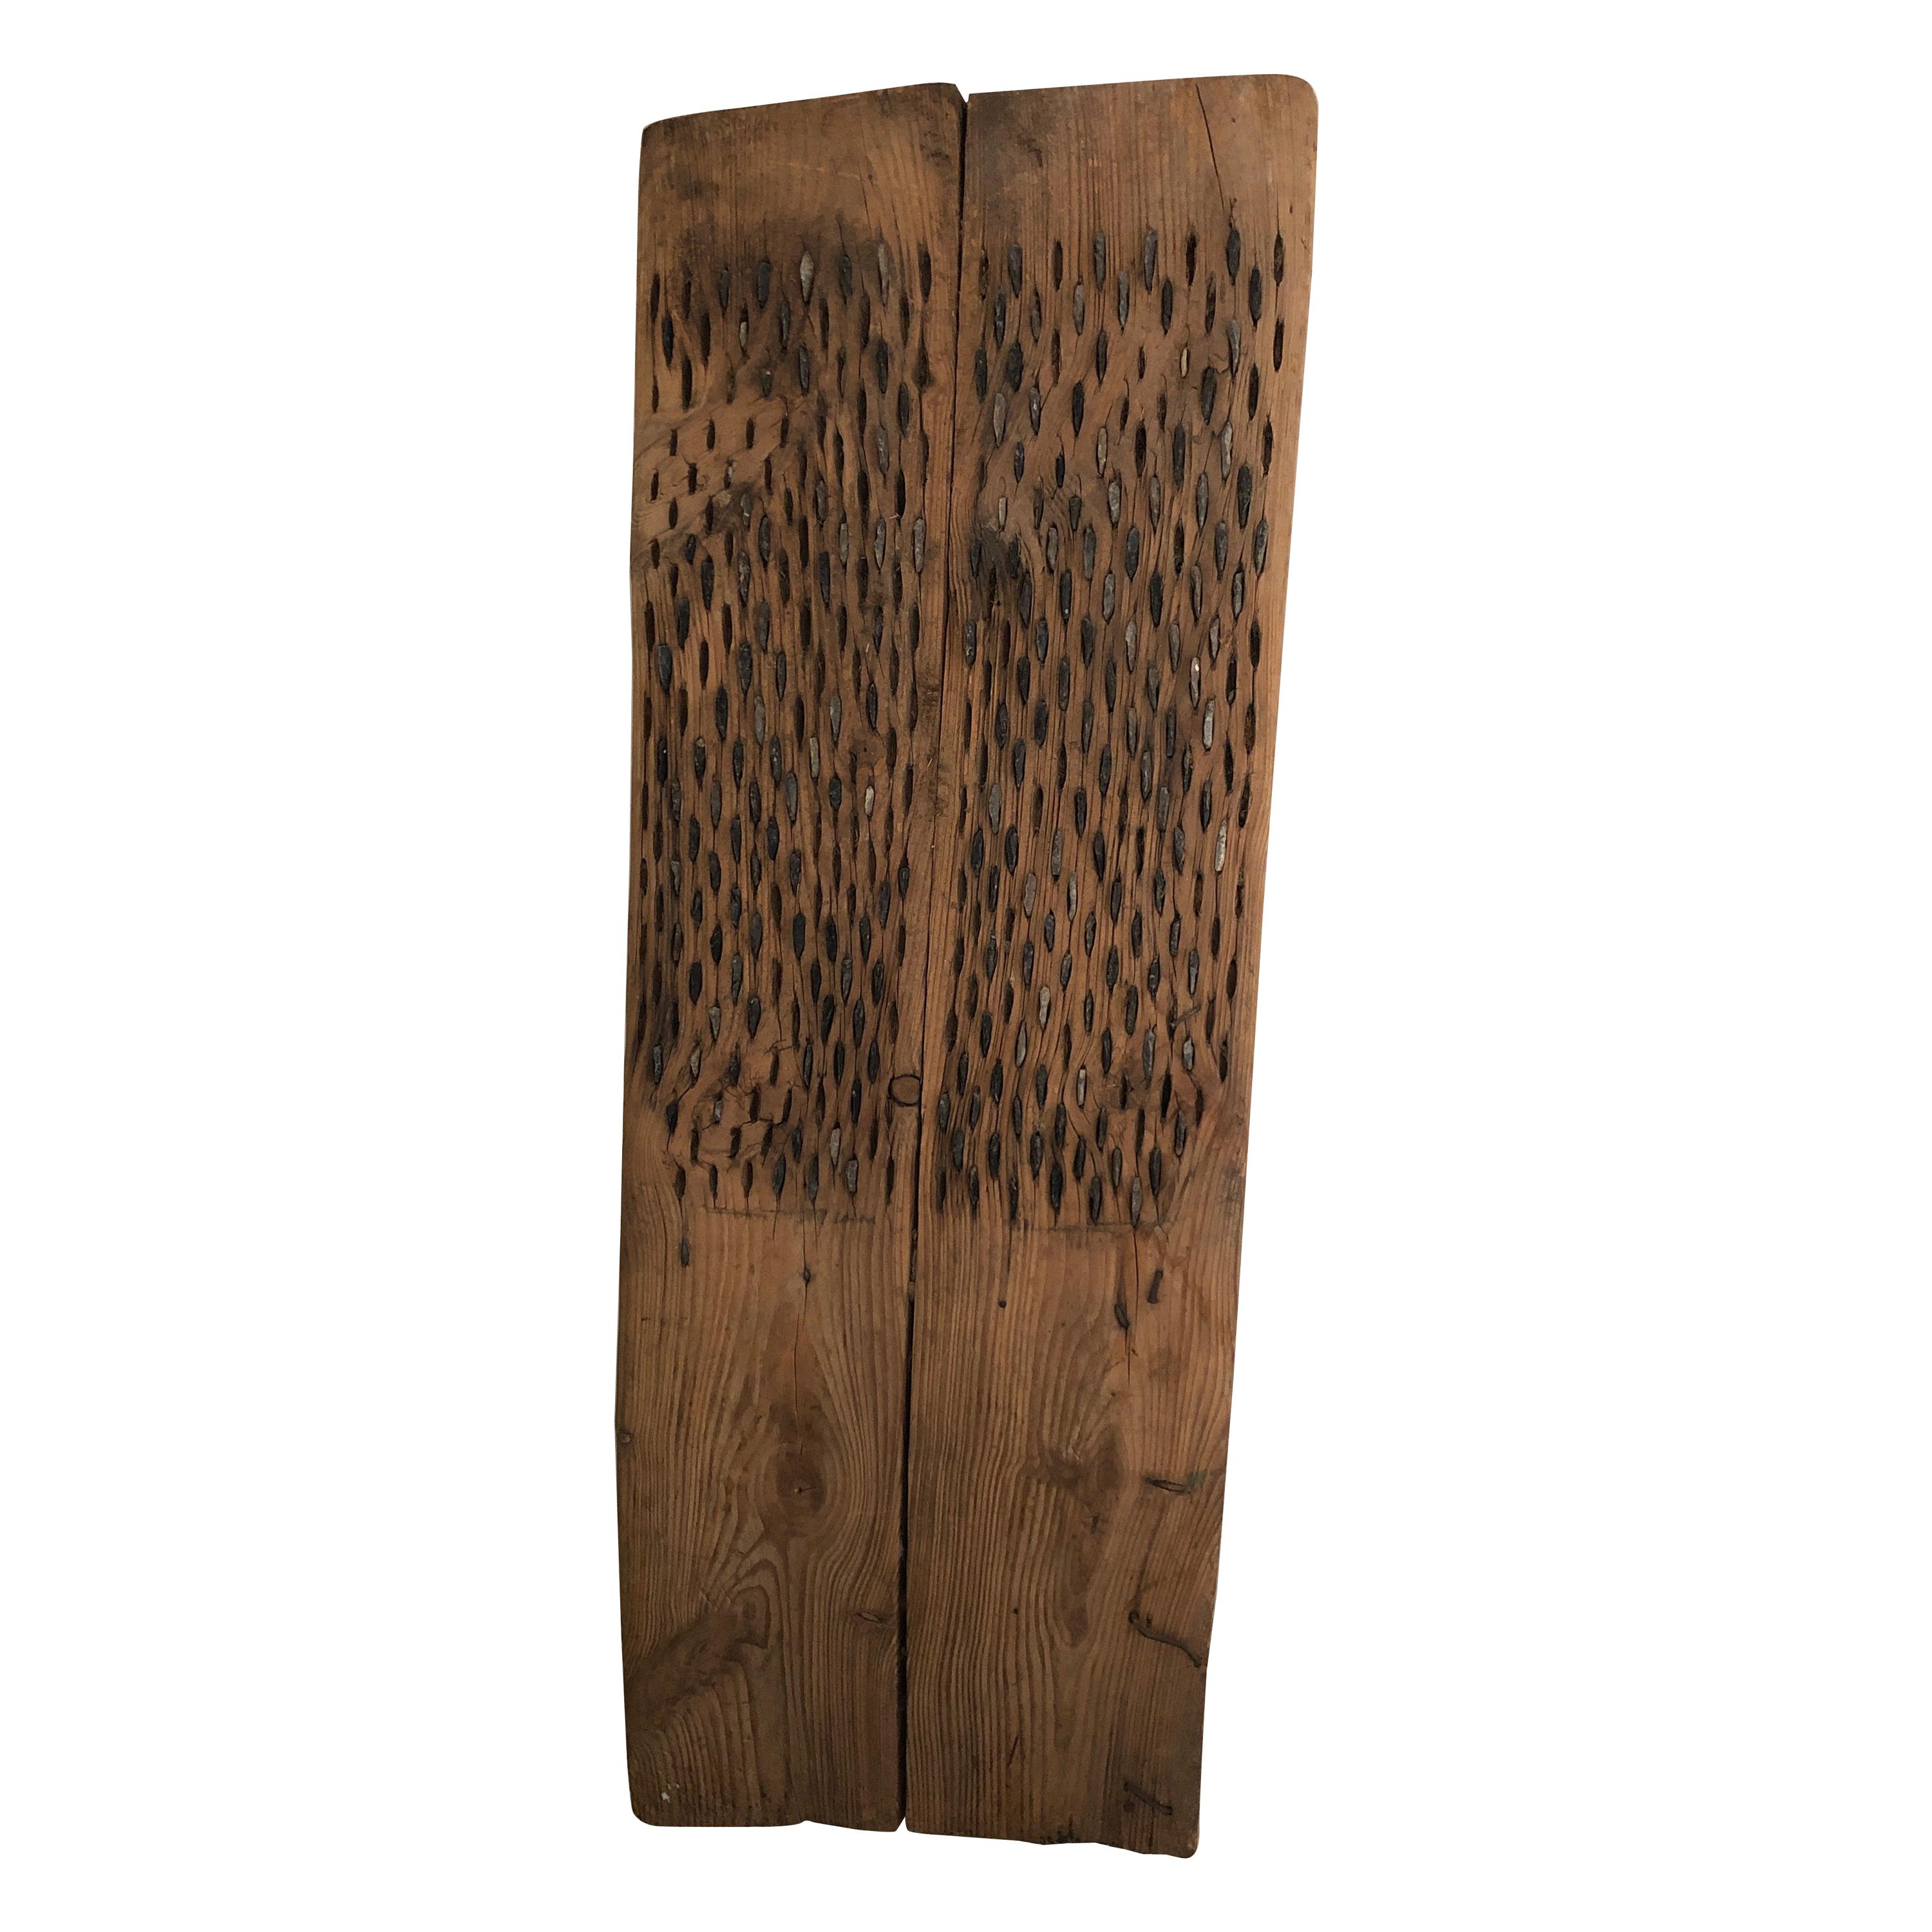 Primitive Turkish Wood and Stone Threshing Board For Sale